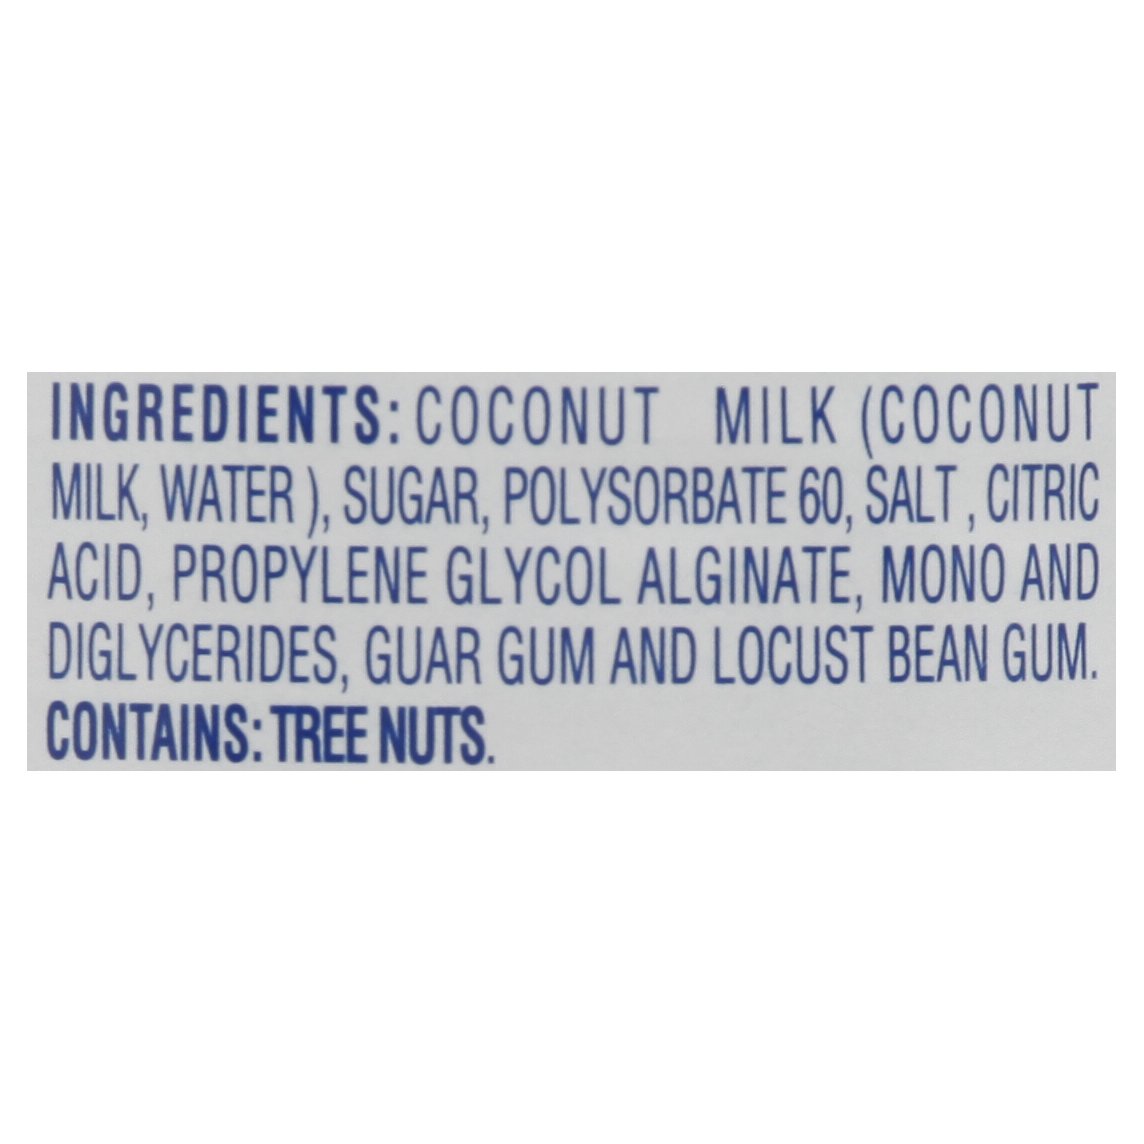 Goya Coconut Milk Cream of Coconut, 15 oz - image 3 of 4